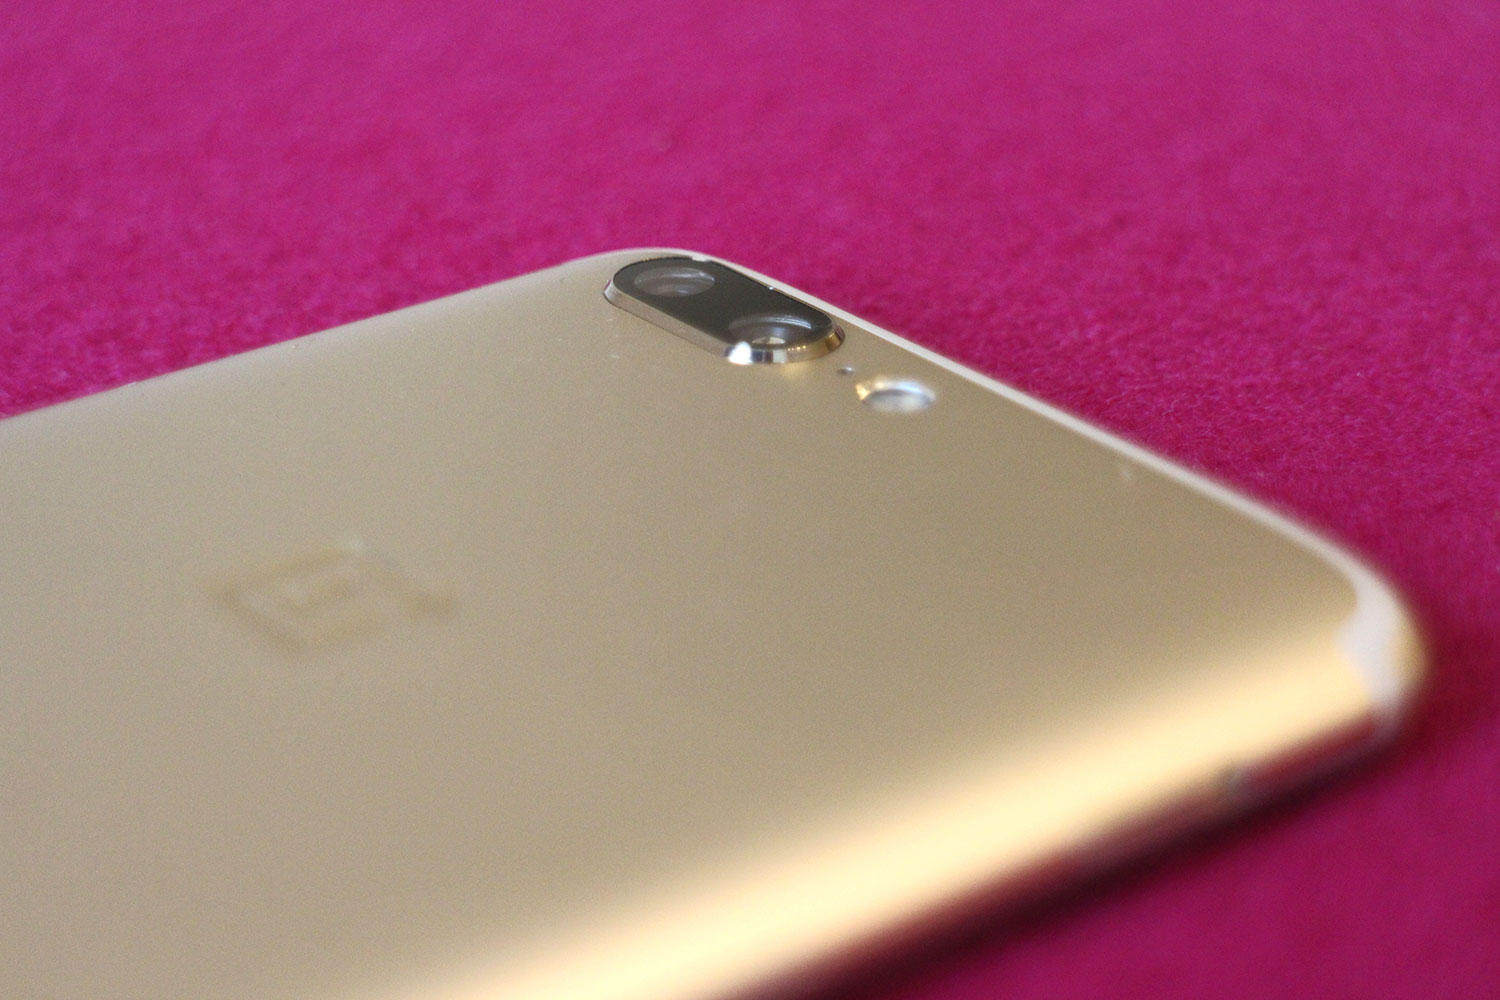 OnePlus 5 soft gold